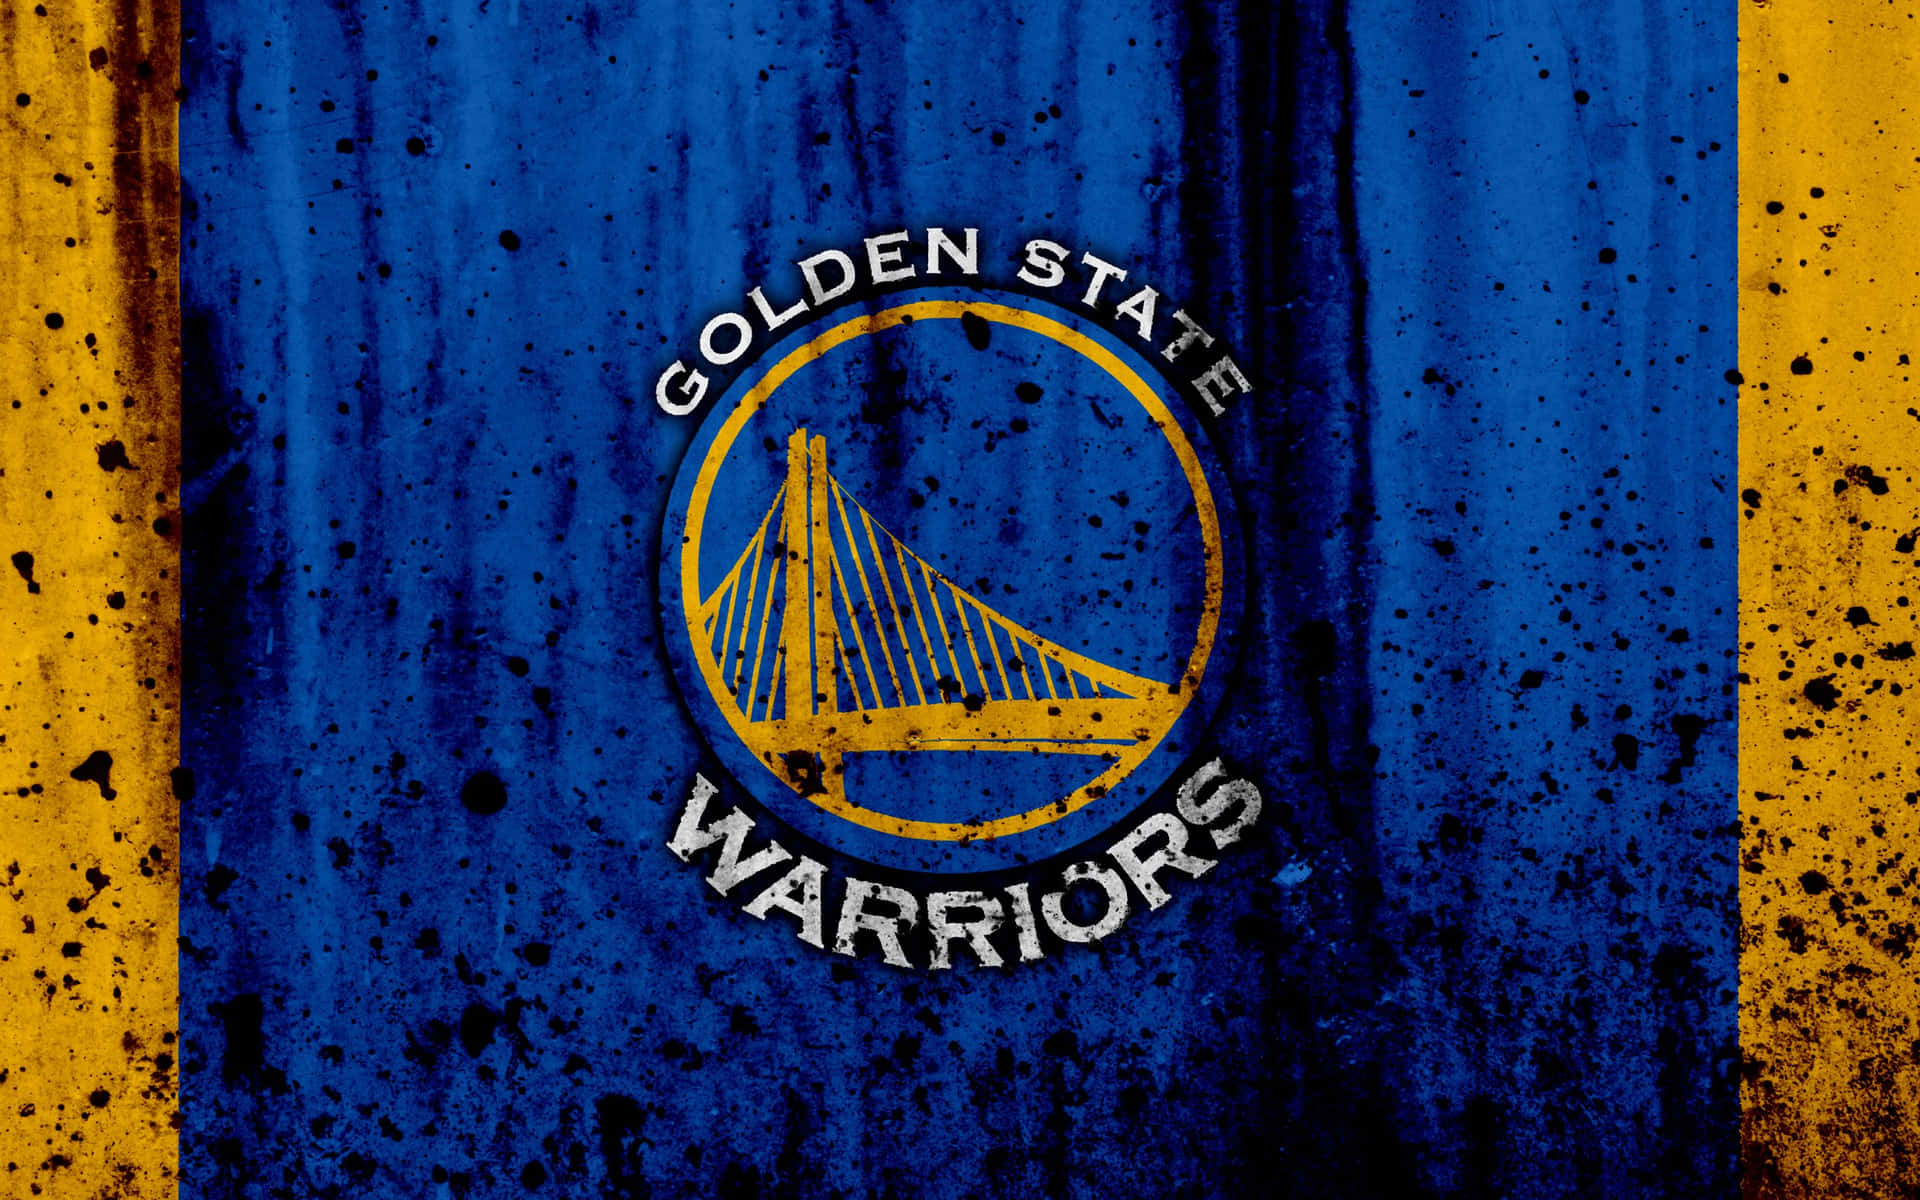 Golden State Warriors Logo With Black Paint Splatters Wallpaper